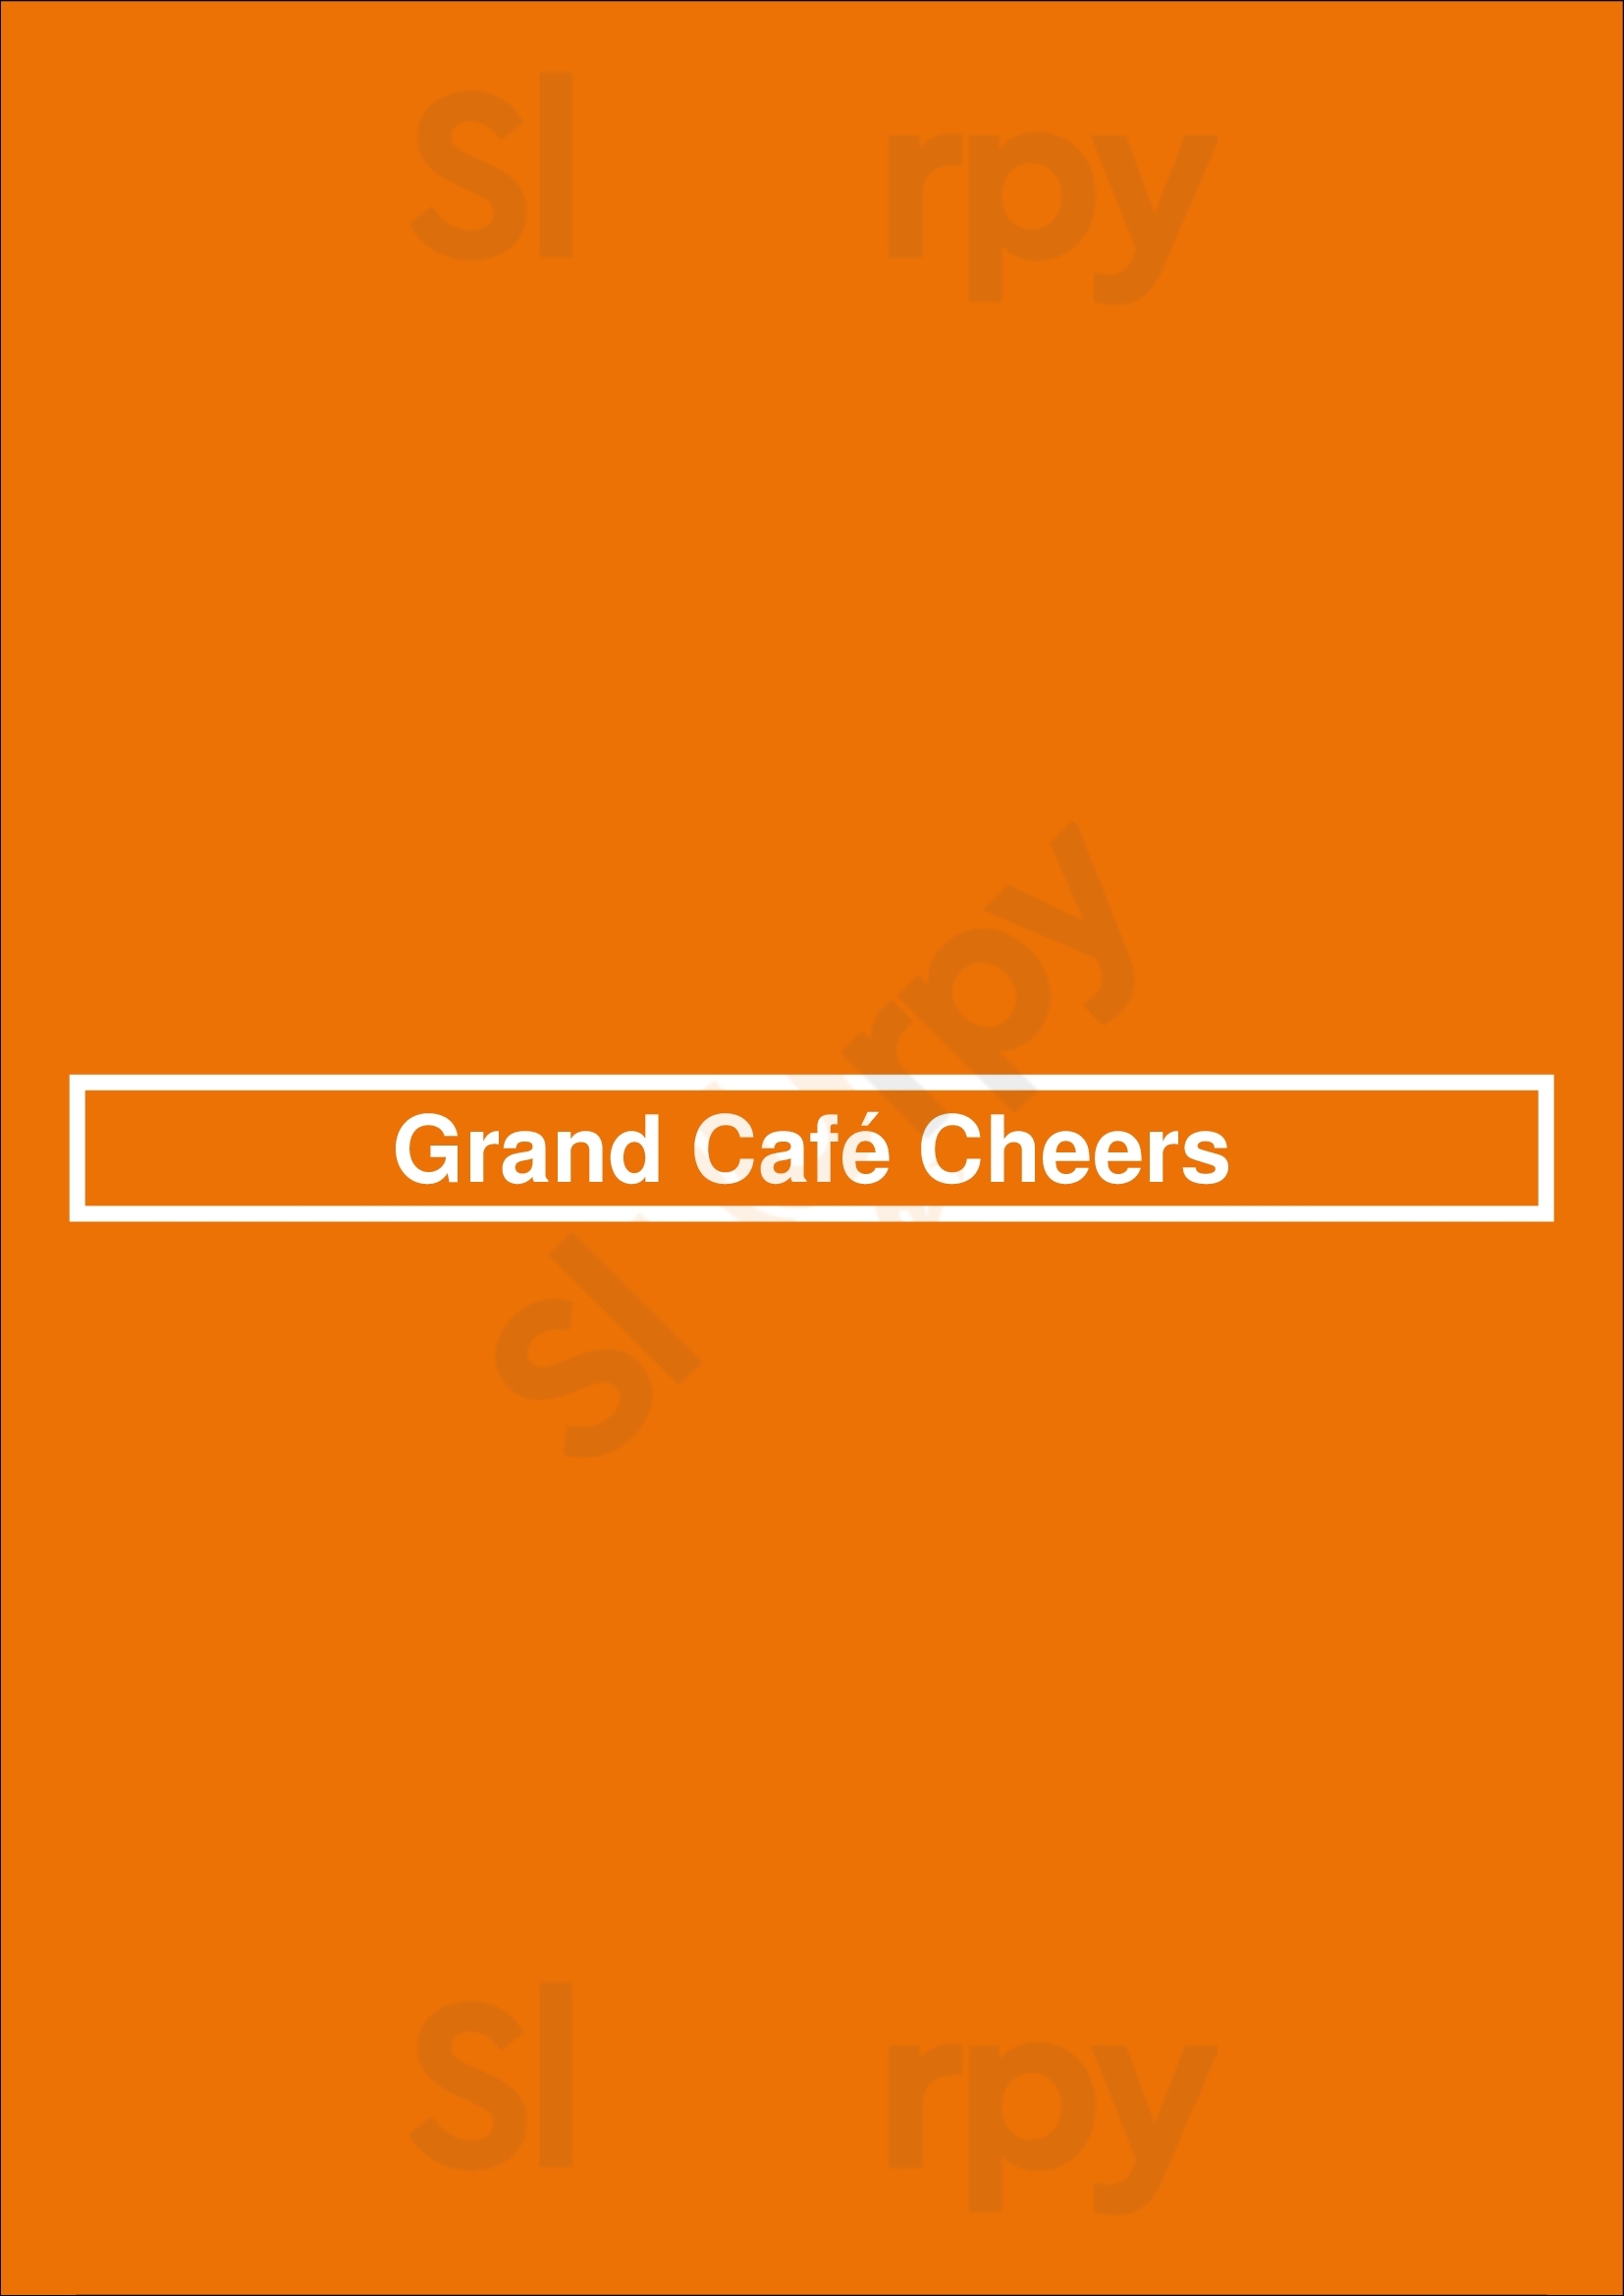 Grand Café Cheers Diemen Menu - 1